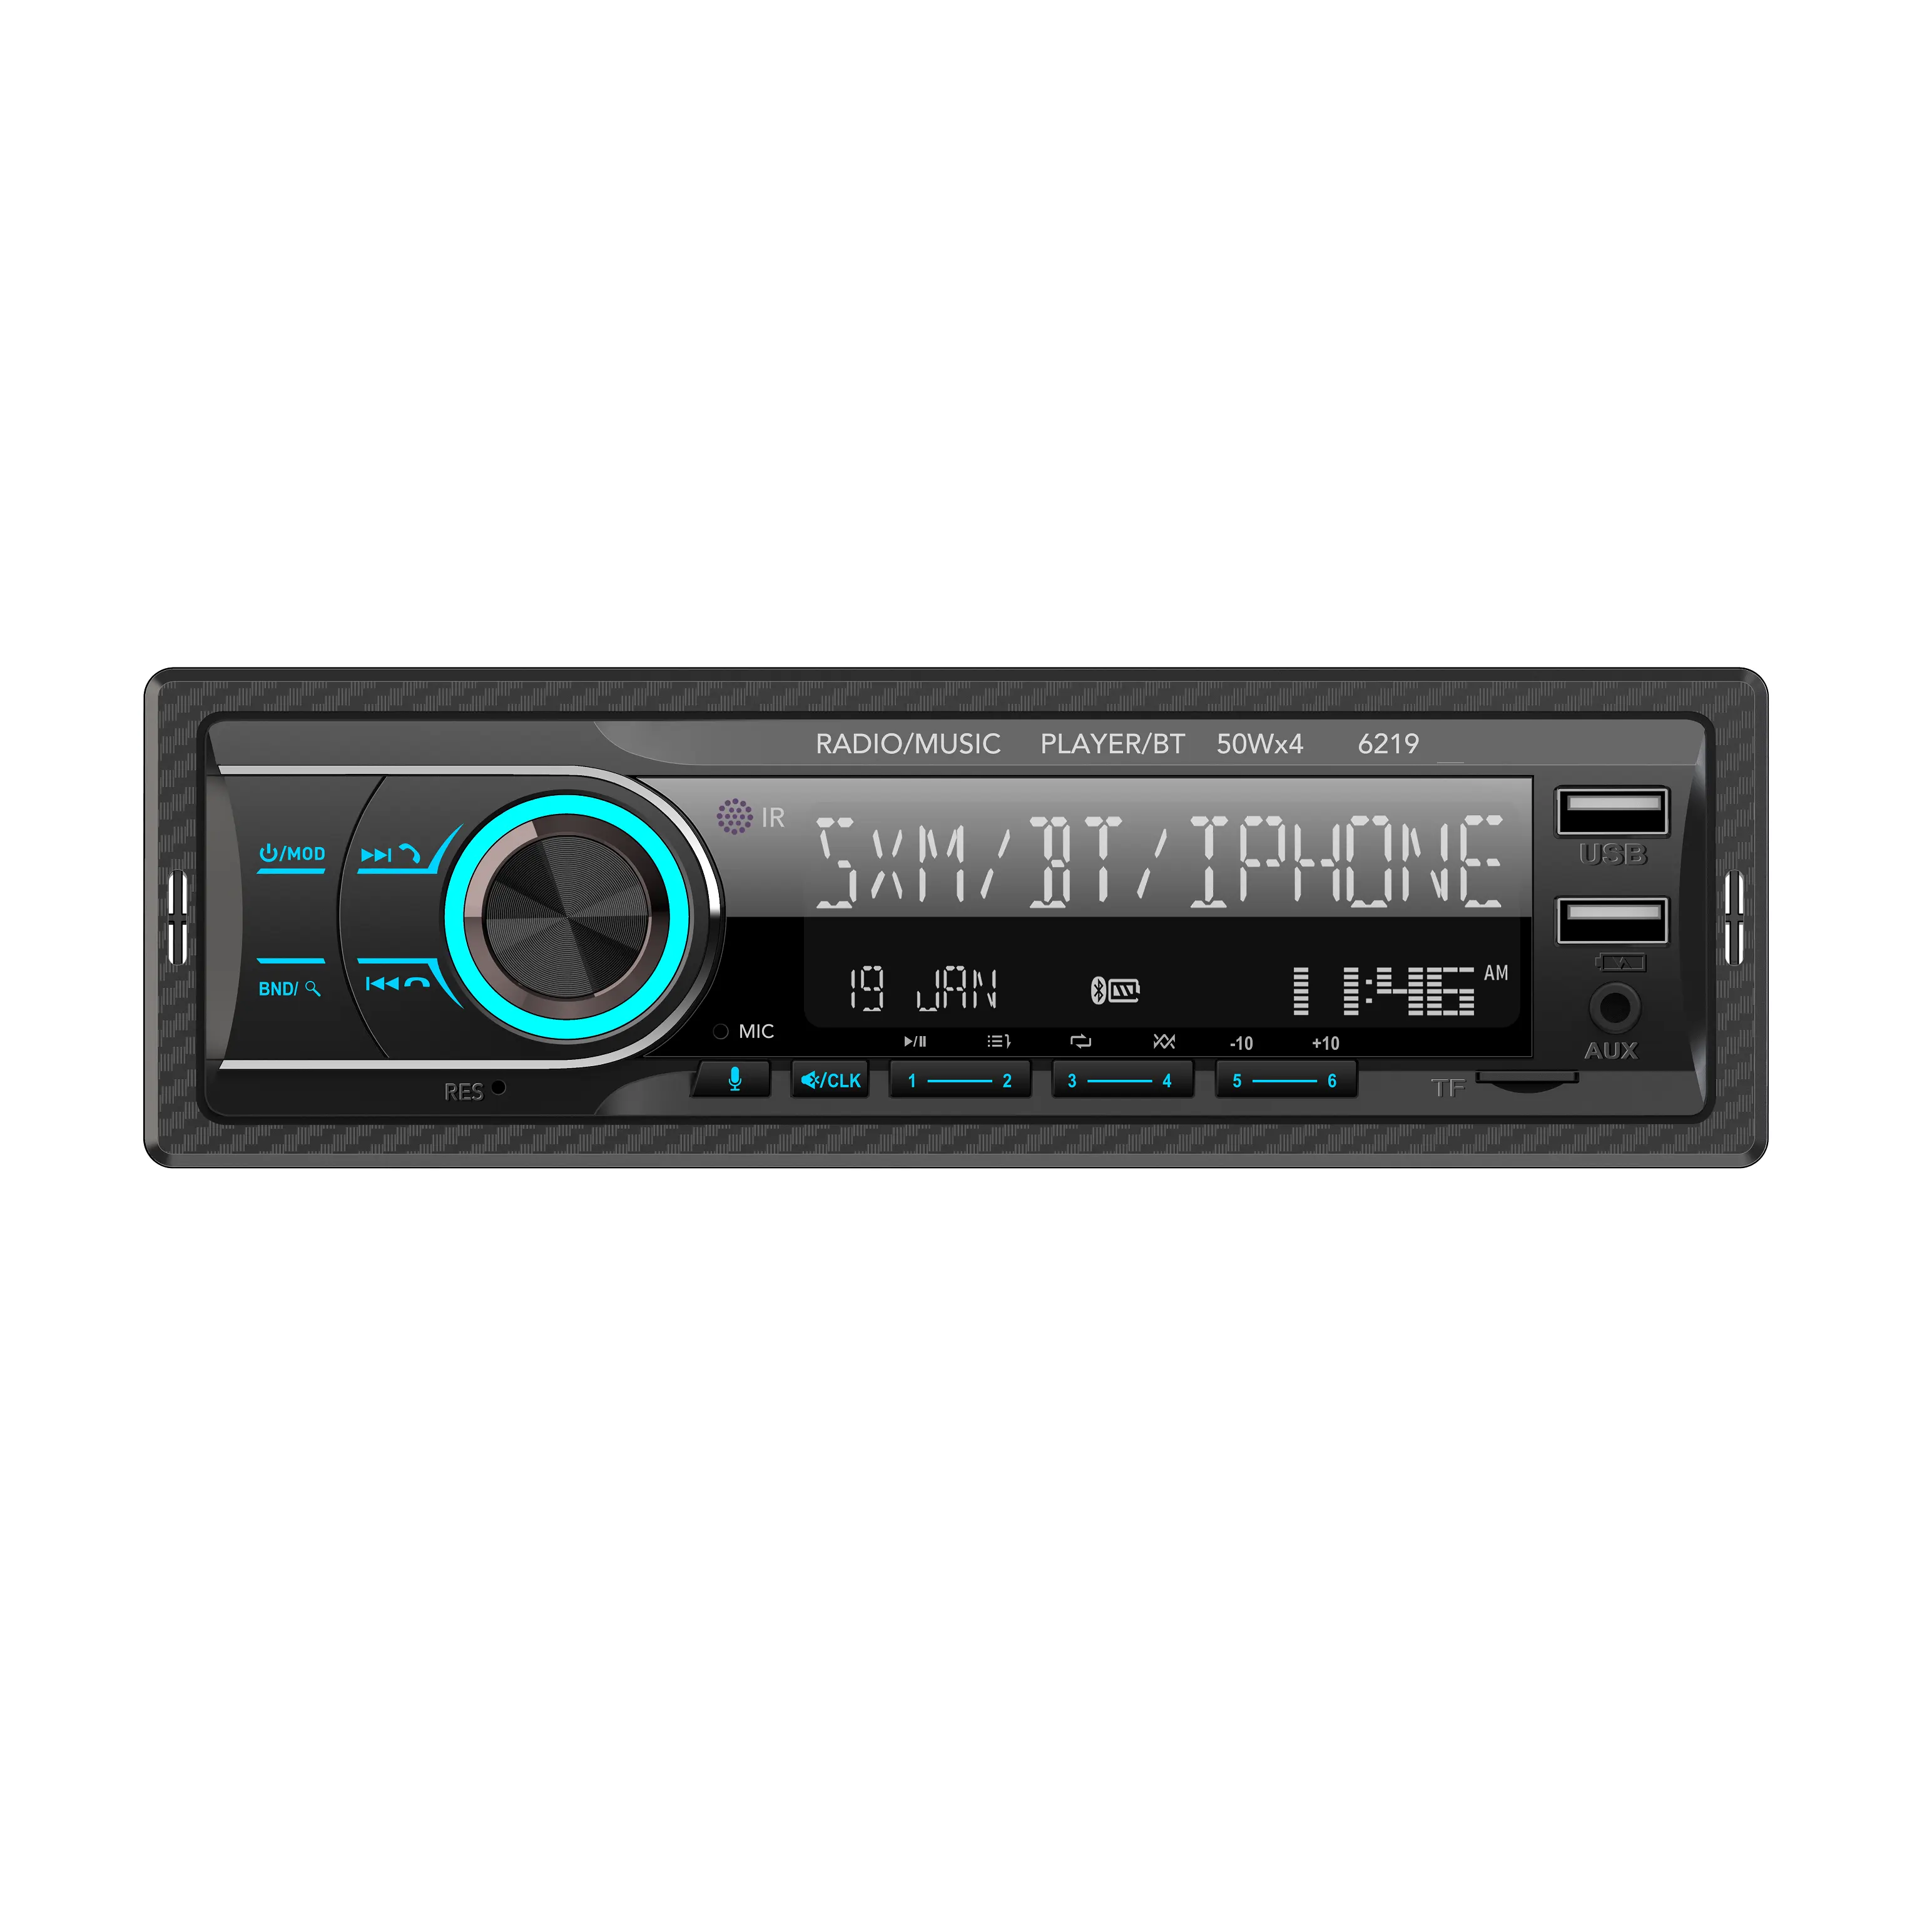 Penerima Radio FM 1 Din Stereo mobil, pemutar MP3 Audio Unit kepala otomatis untuk mobil